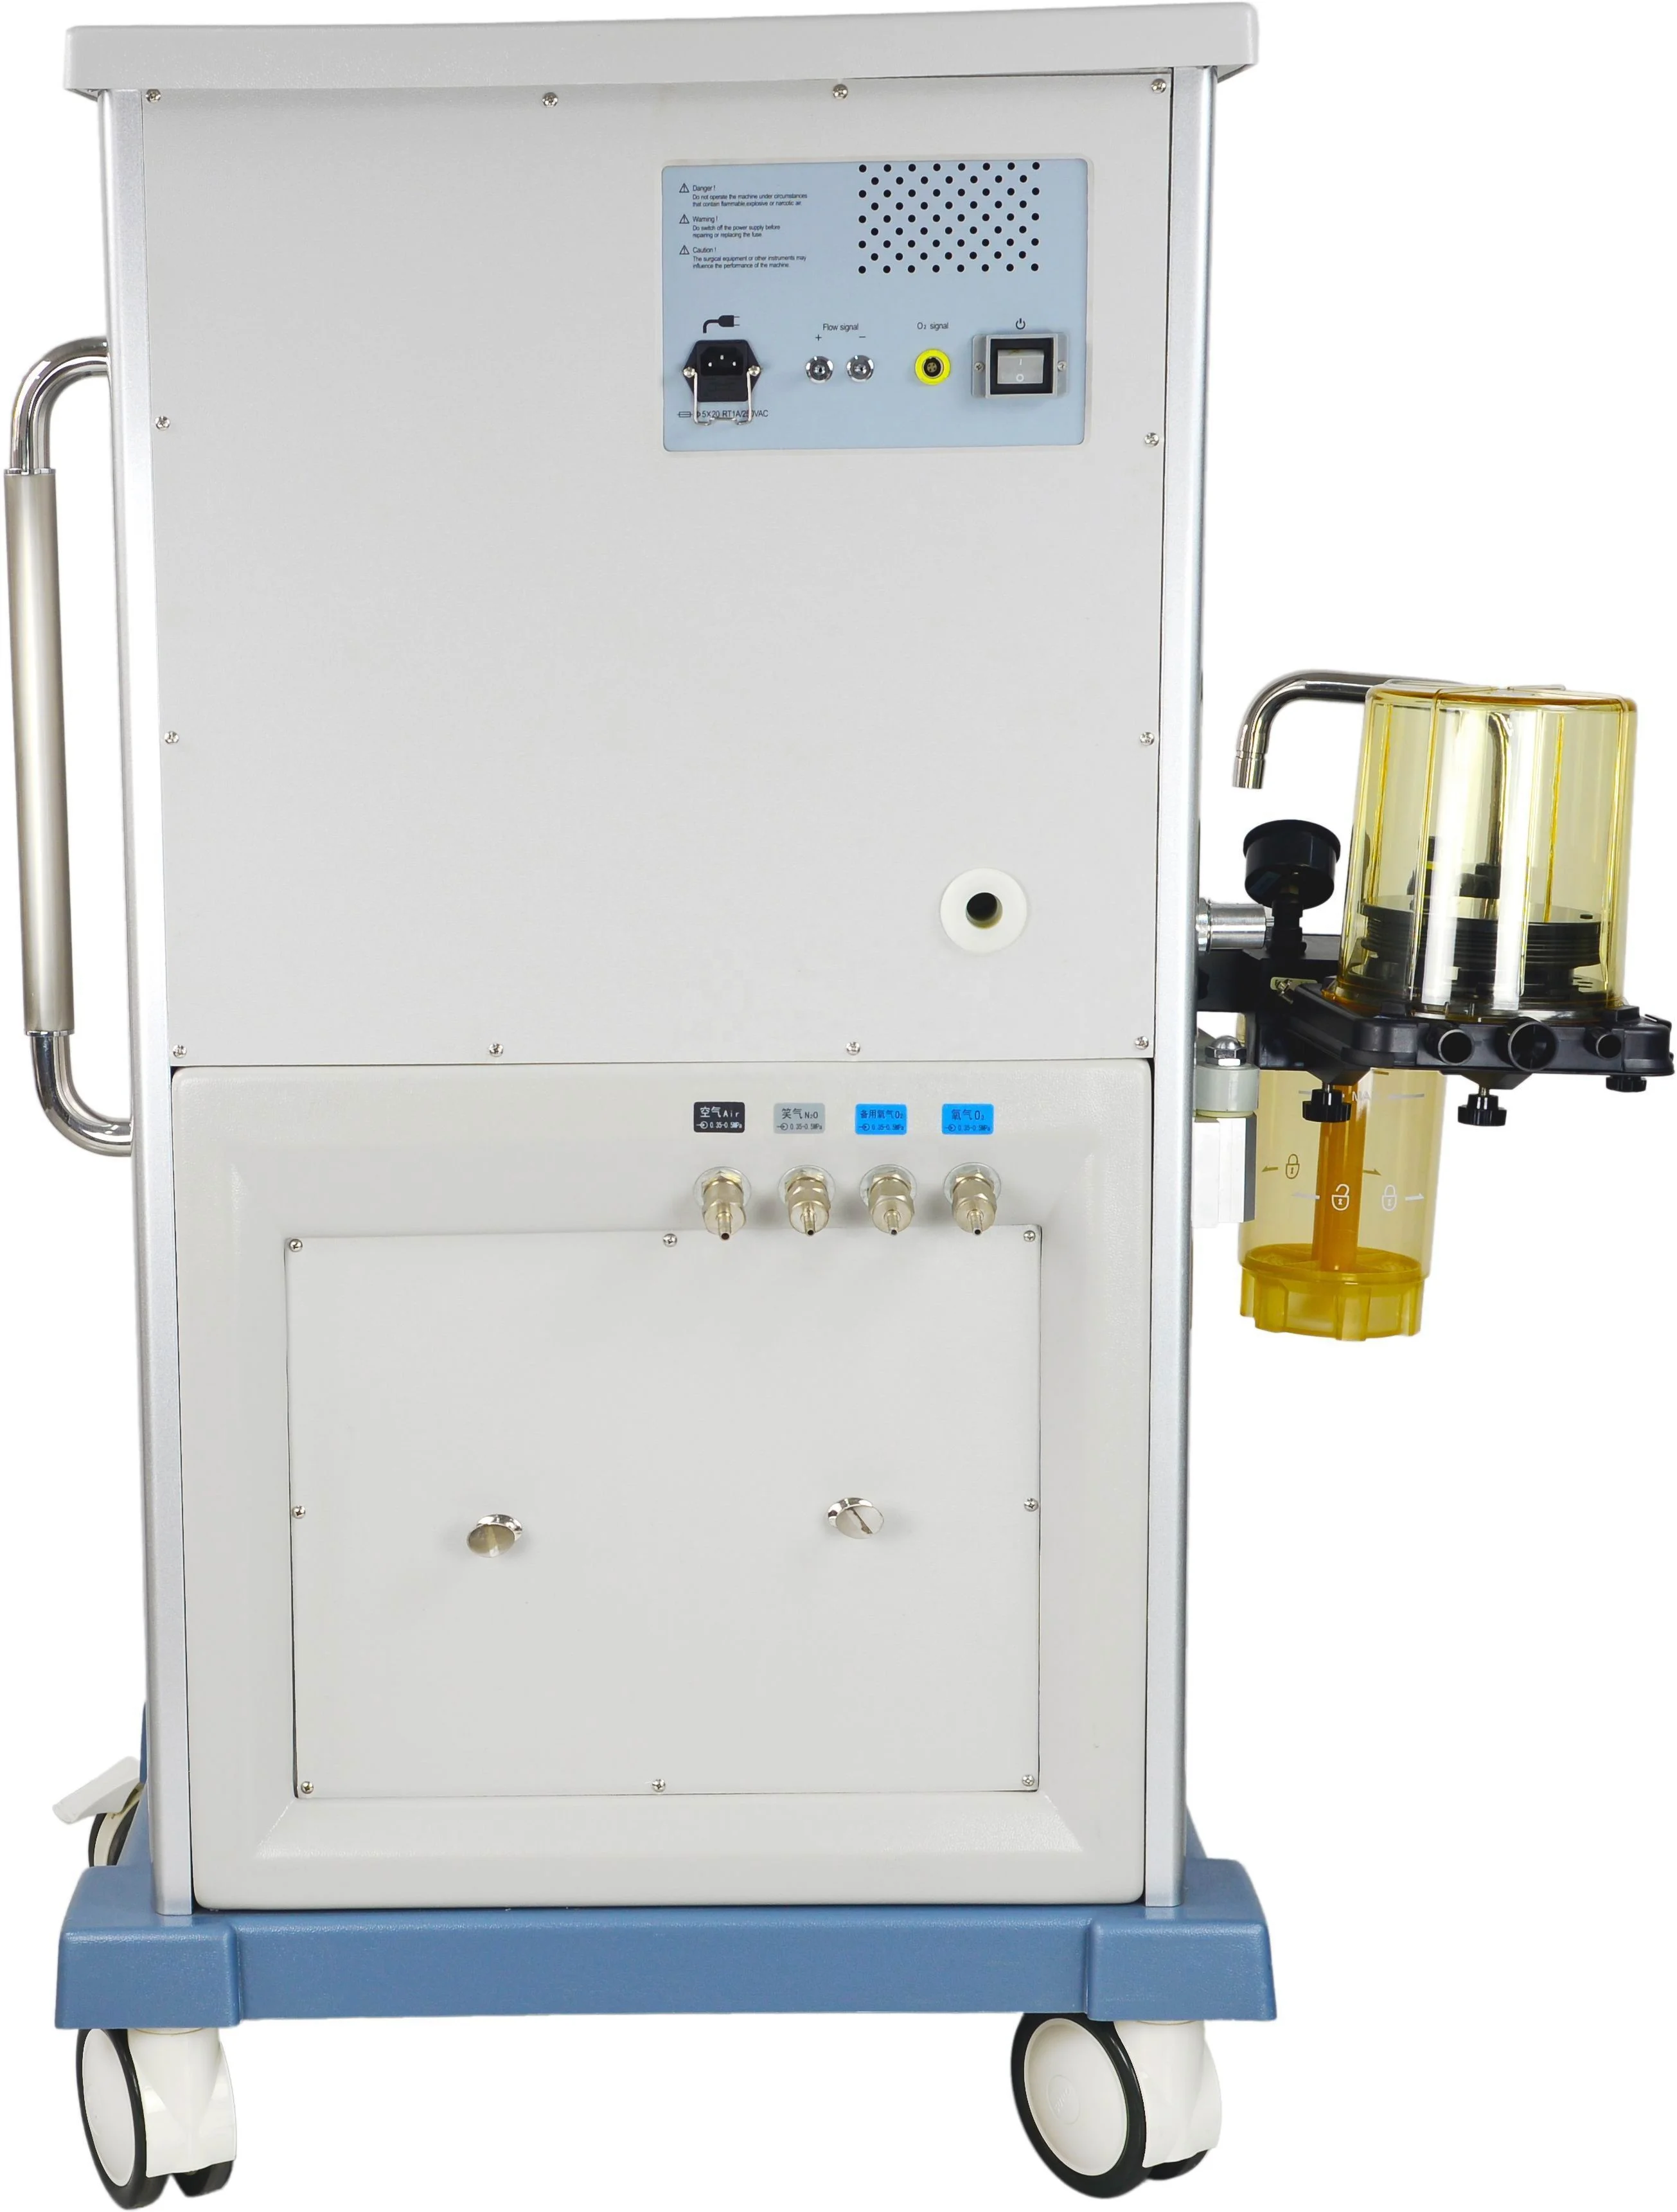 Portable Medical Anesthesia Instrument Anesthesia Machine